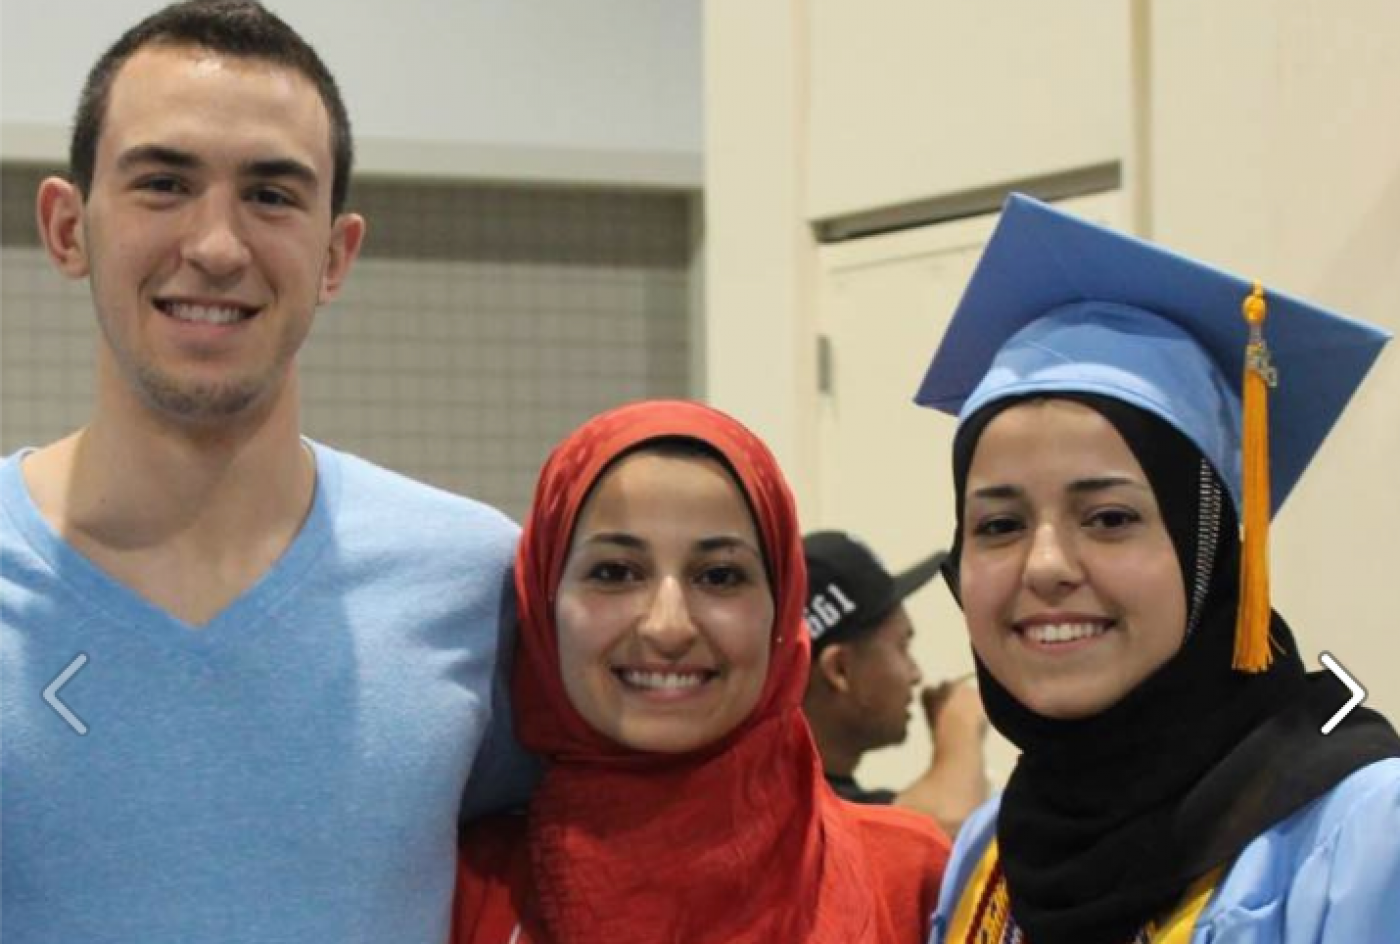 A photo of Deah Barakat, Yusor Abu-Salha, and Razan Abu-Salha, who were killed on 10 February 2015.